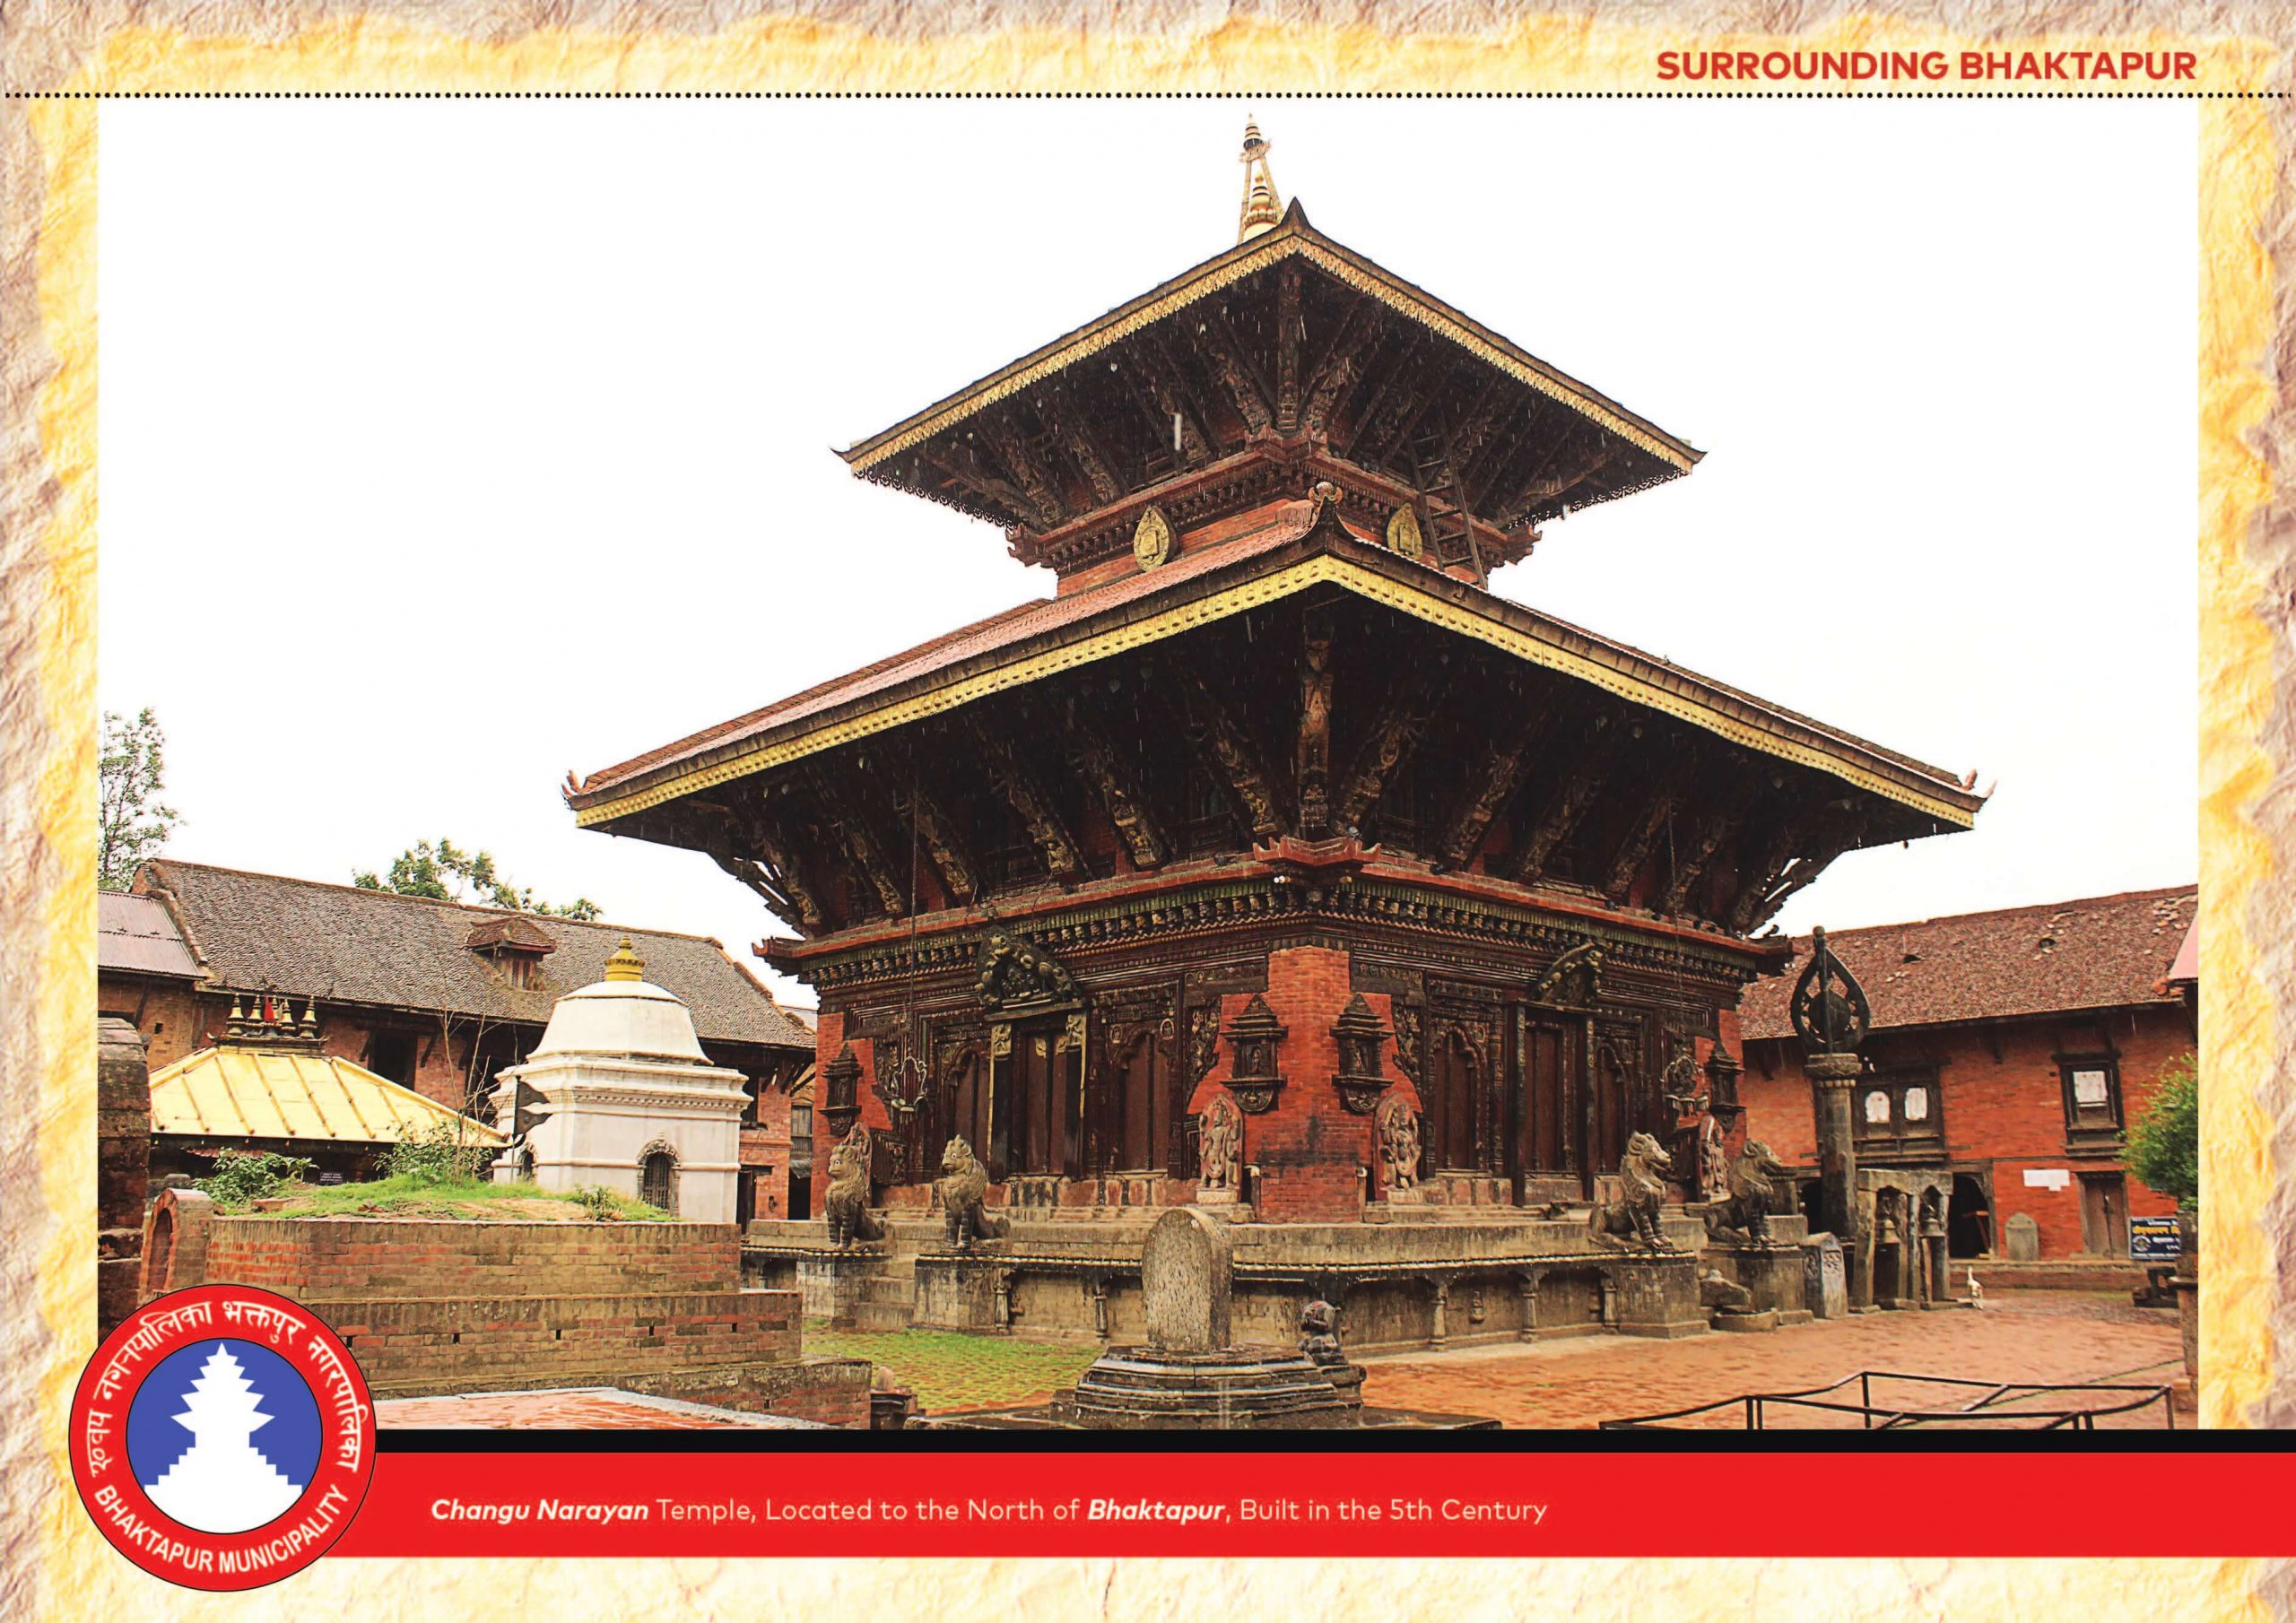 Changu Narayan Temple image